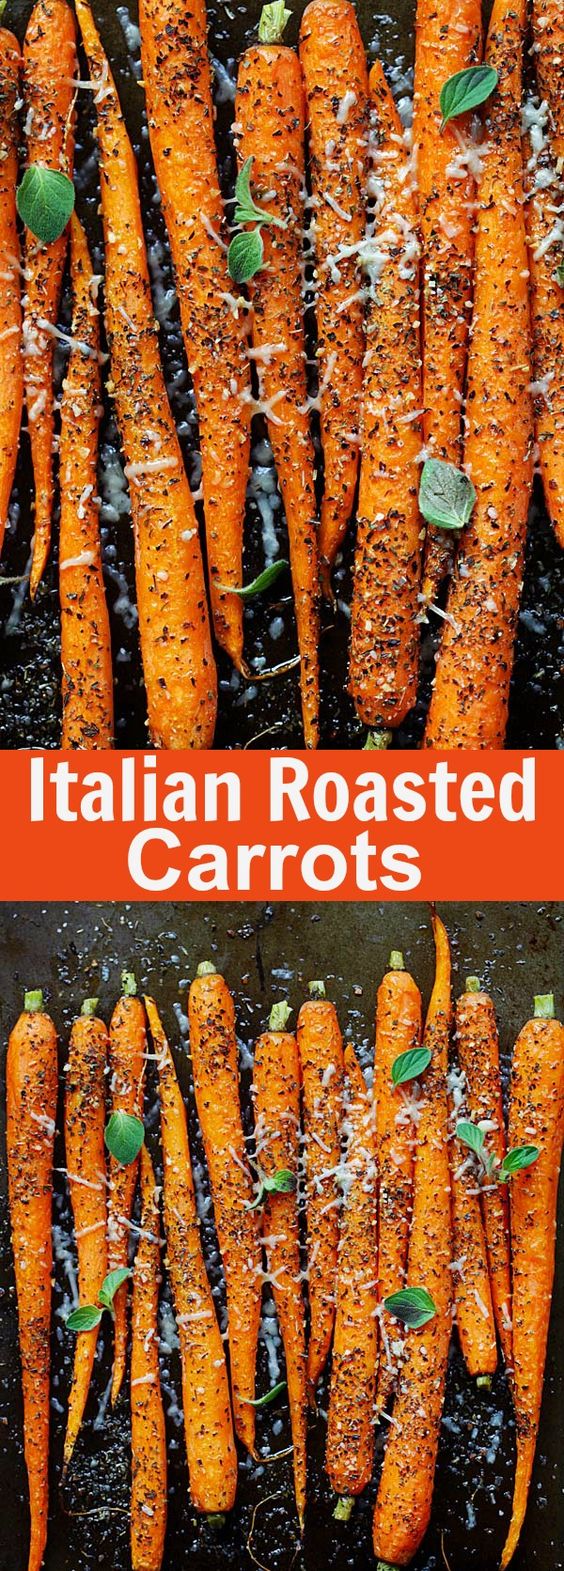 Italian Roasted Carrots - crazy delicious roasted carrots recipe with Italian seasonings, fresh herbs and Parmesan cheese. So easy to make | rasamalaysia.com